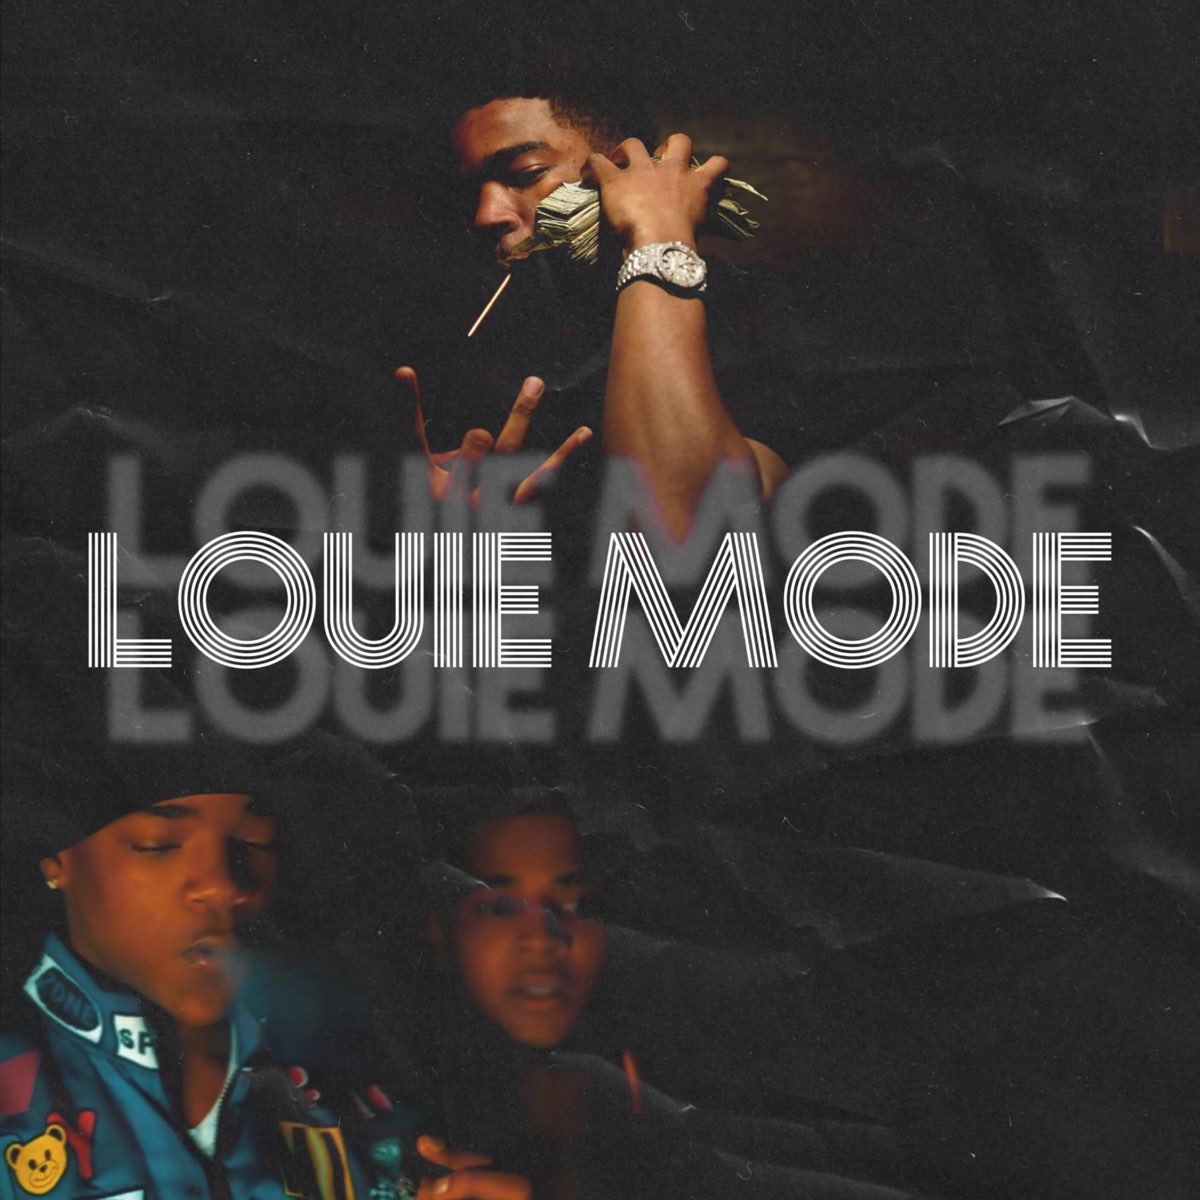 ‎Louie Mode - Album by Jay Louie V - Apple Music